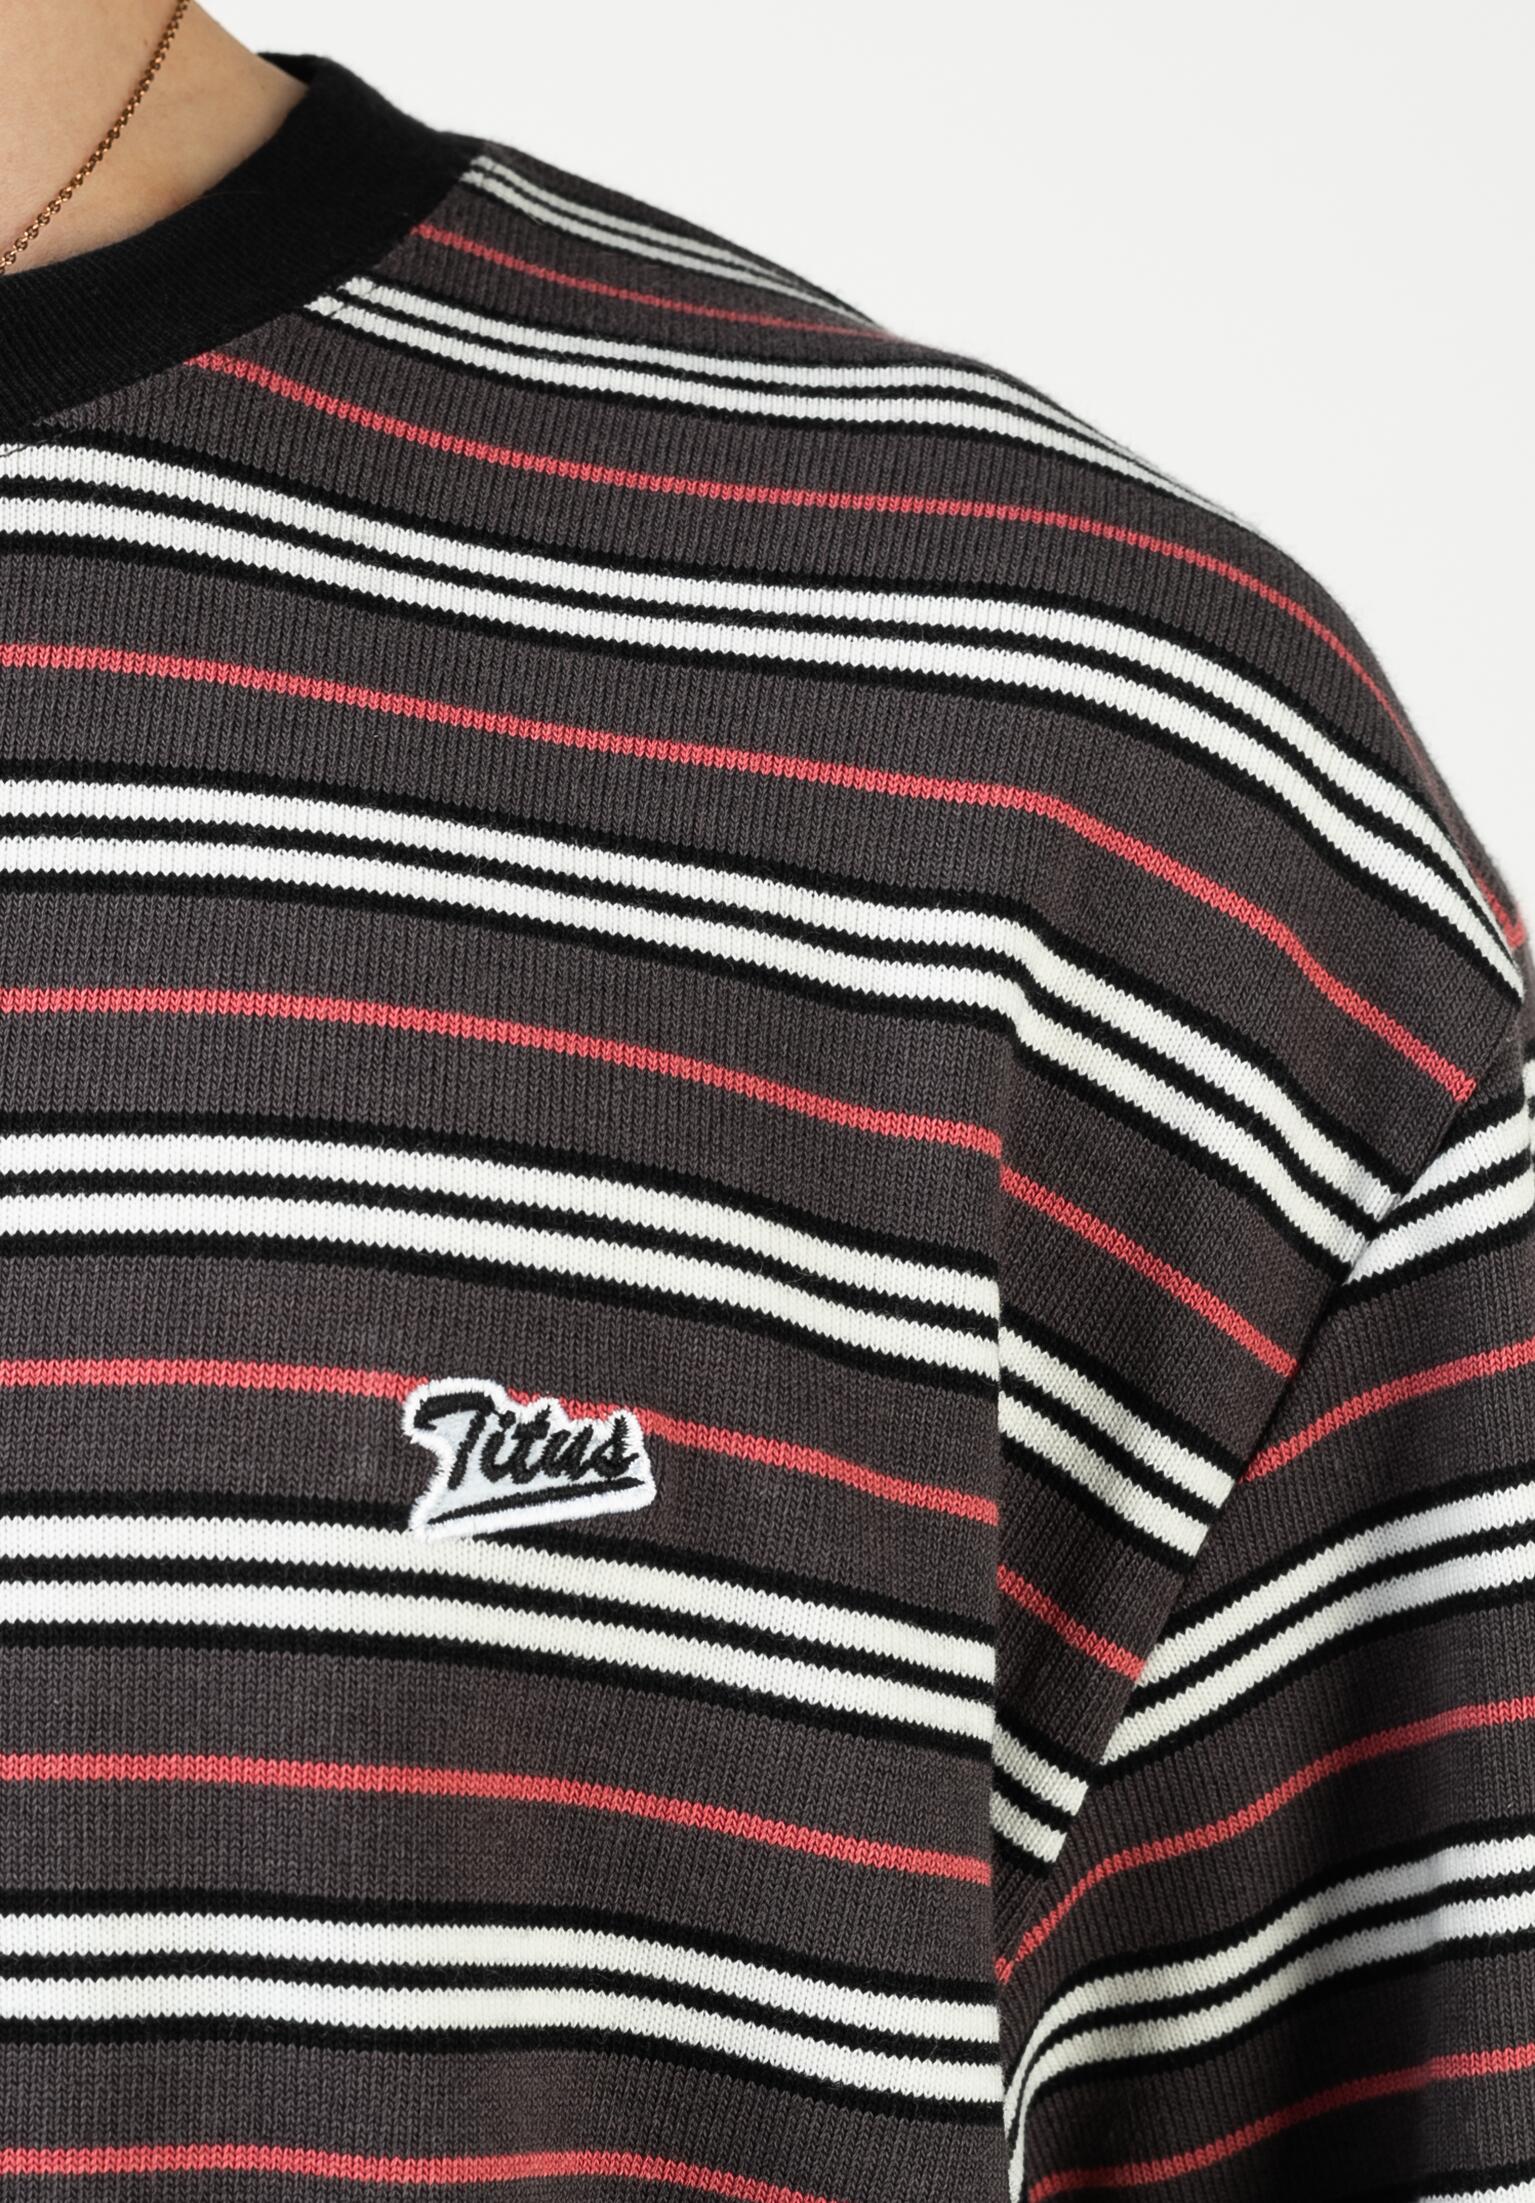 titus-t-shirts-koa-brown-striped-rueckenansicht-0321923.jpg